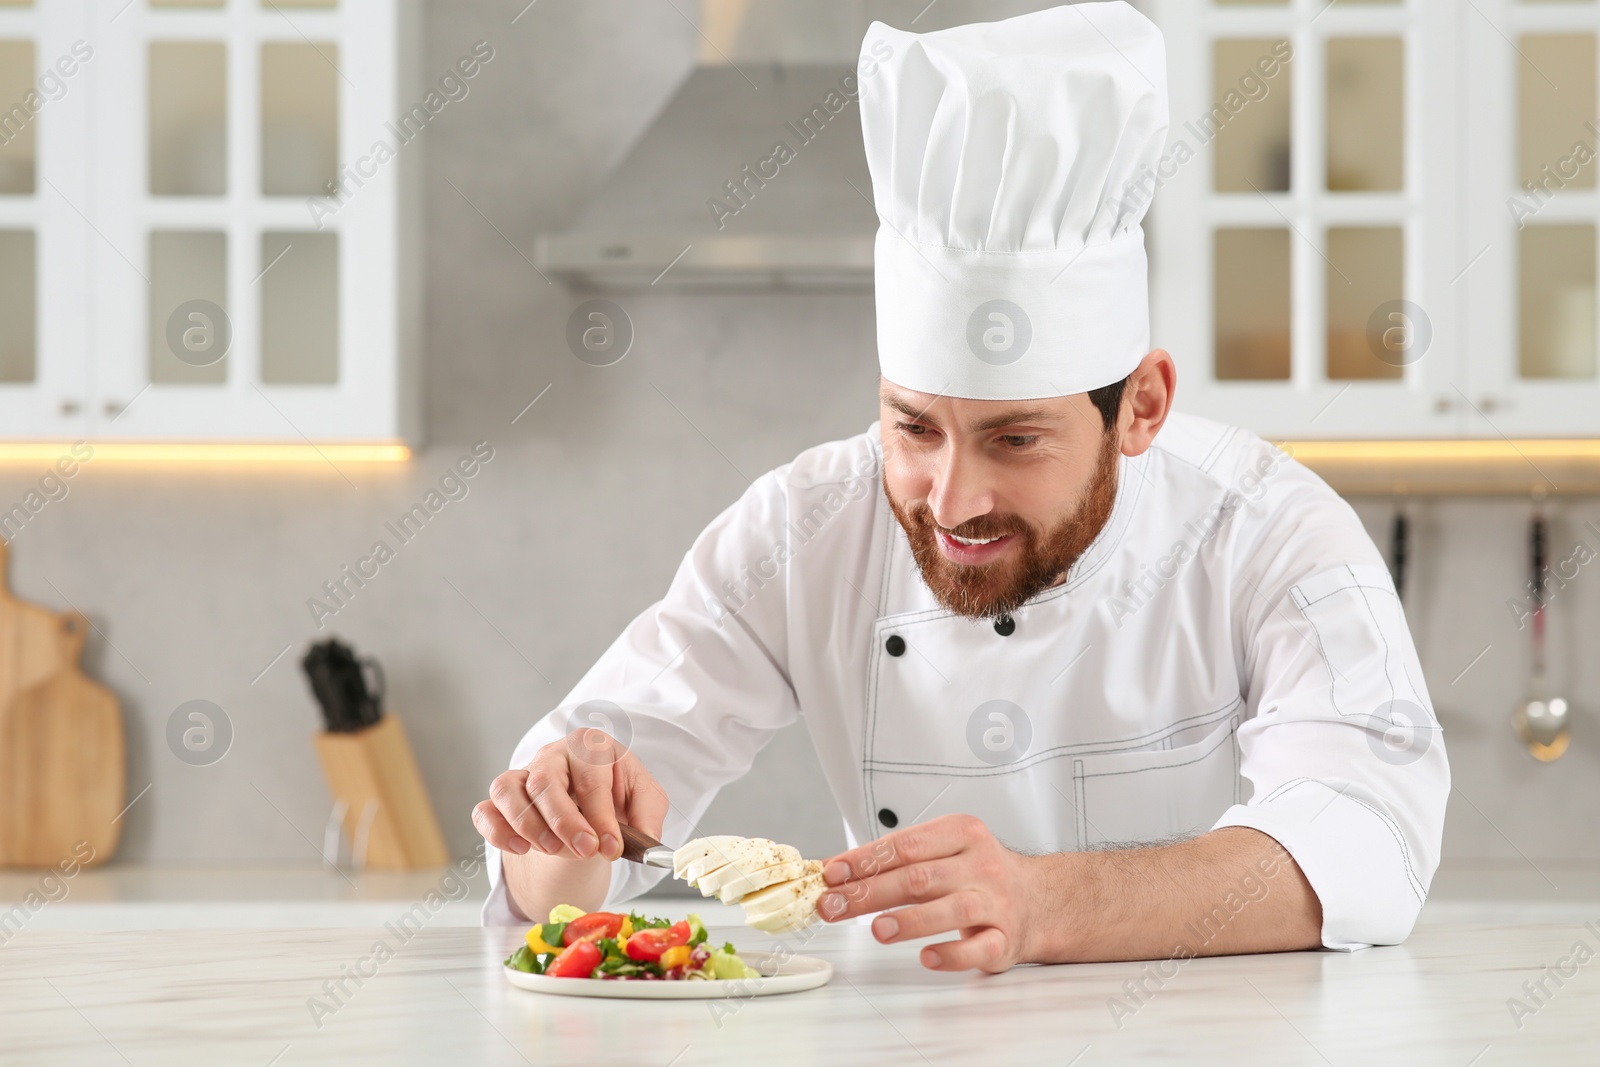 Photo of Professional chef adding mozzarella into delicious salad at marble table in kitchen